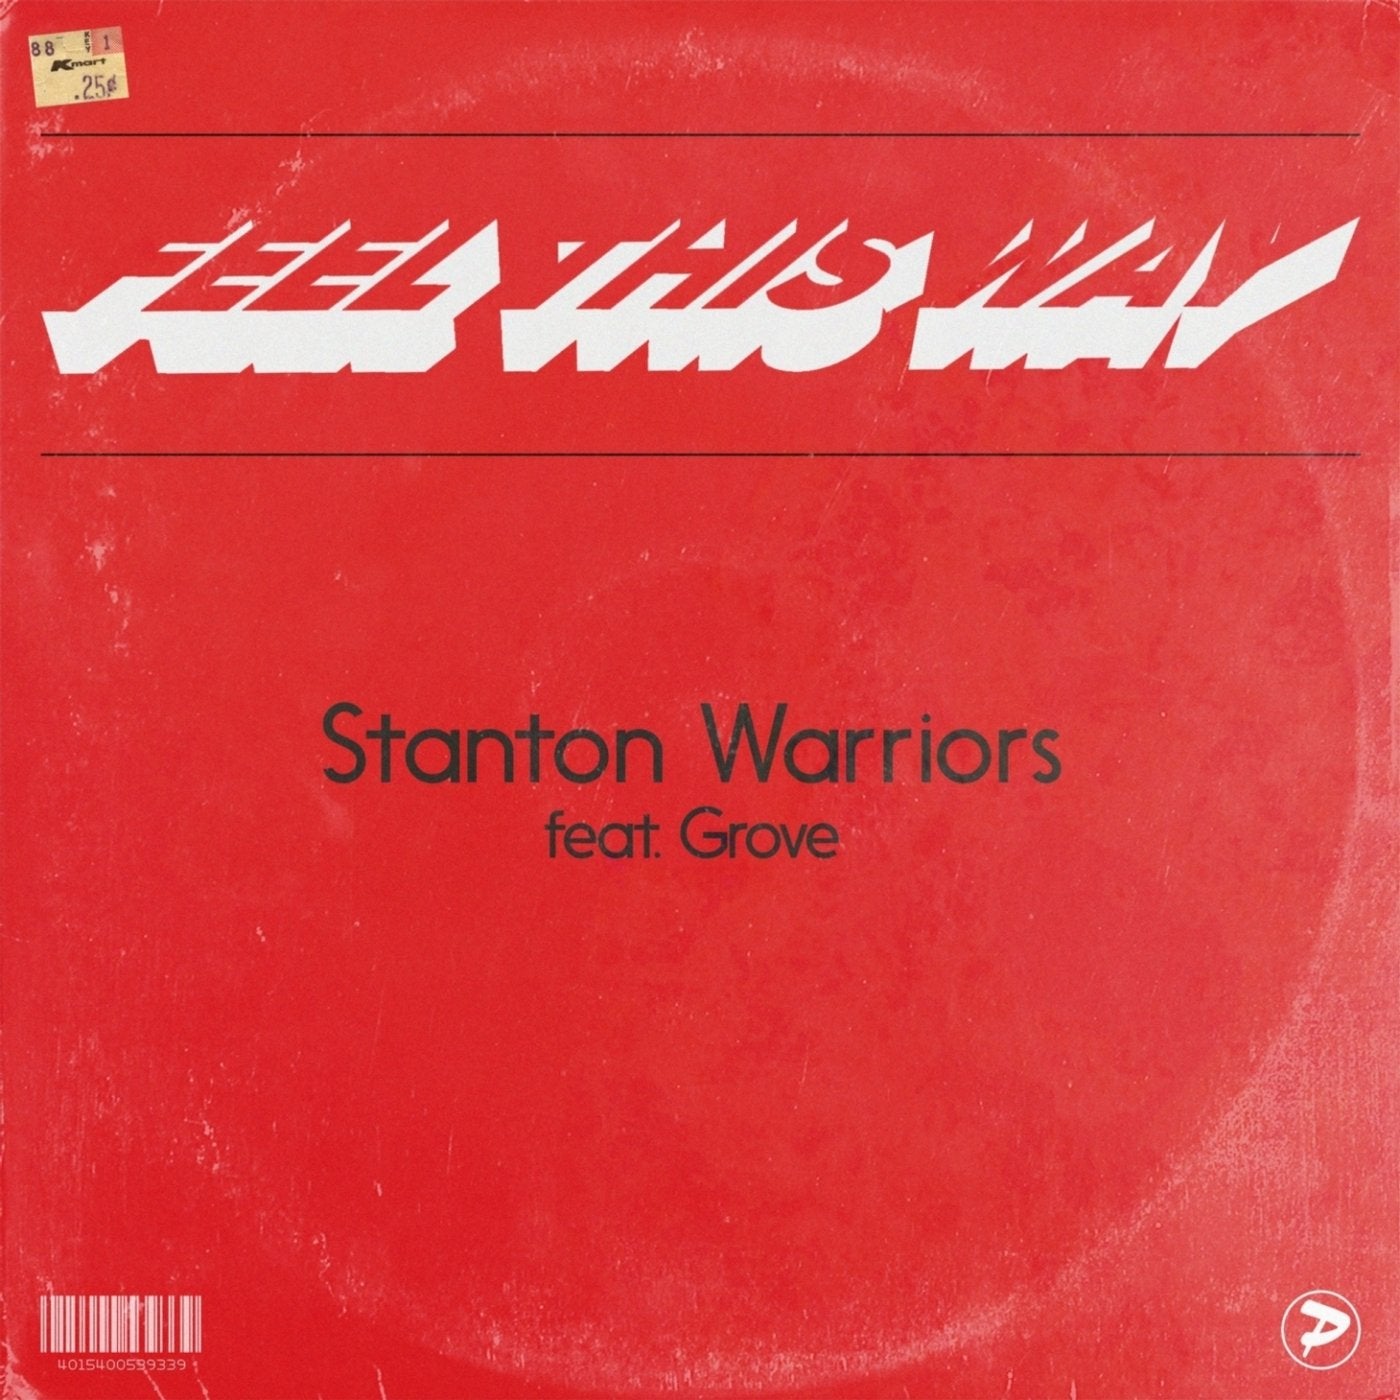 Stanton warriors. Feel this way Stanton Warriors. Stanton Warriors - feel this way (+ Grove). Stanton Warrior фото. Stanton Warriors - hold on.